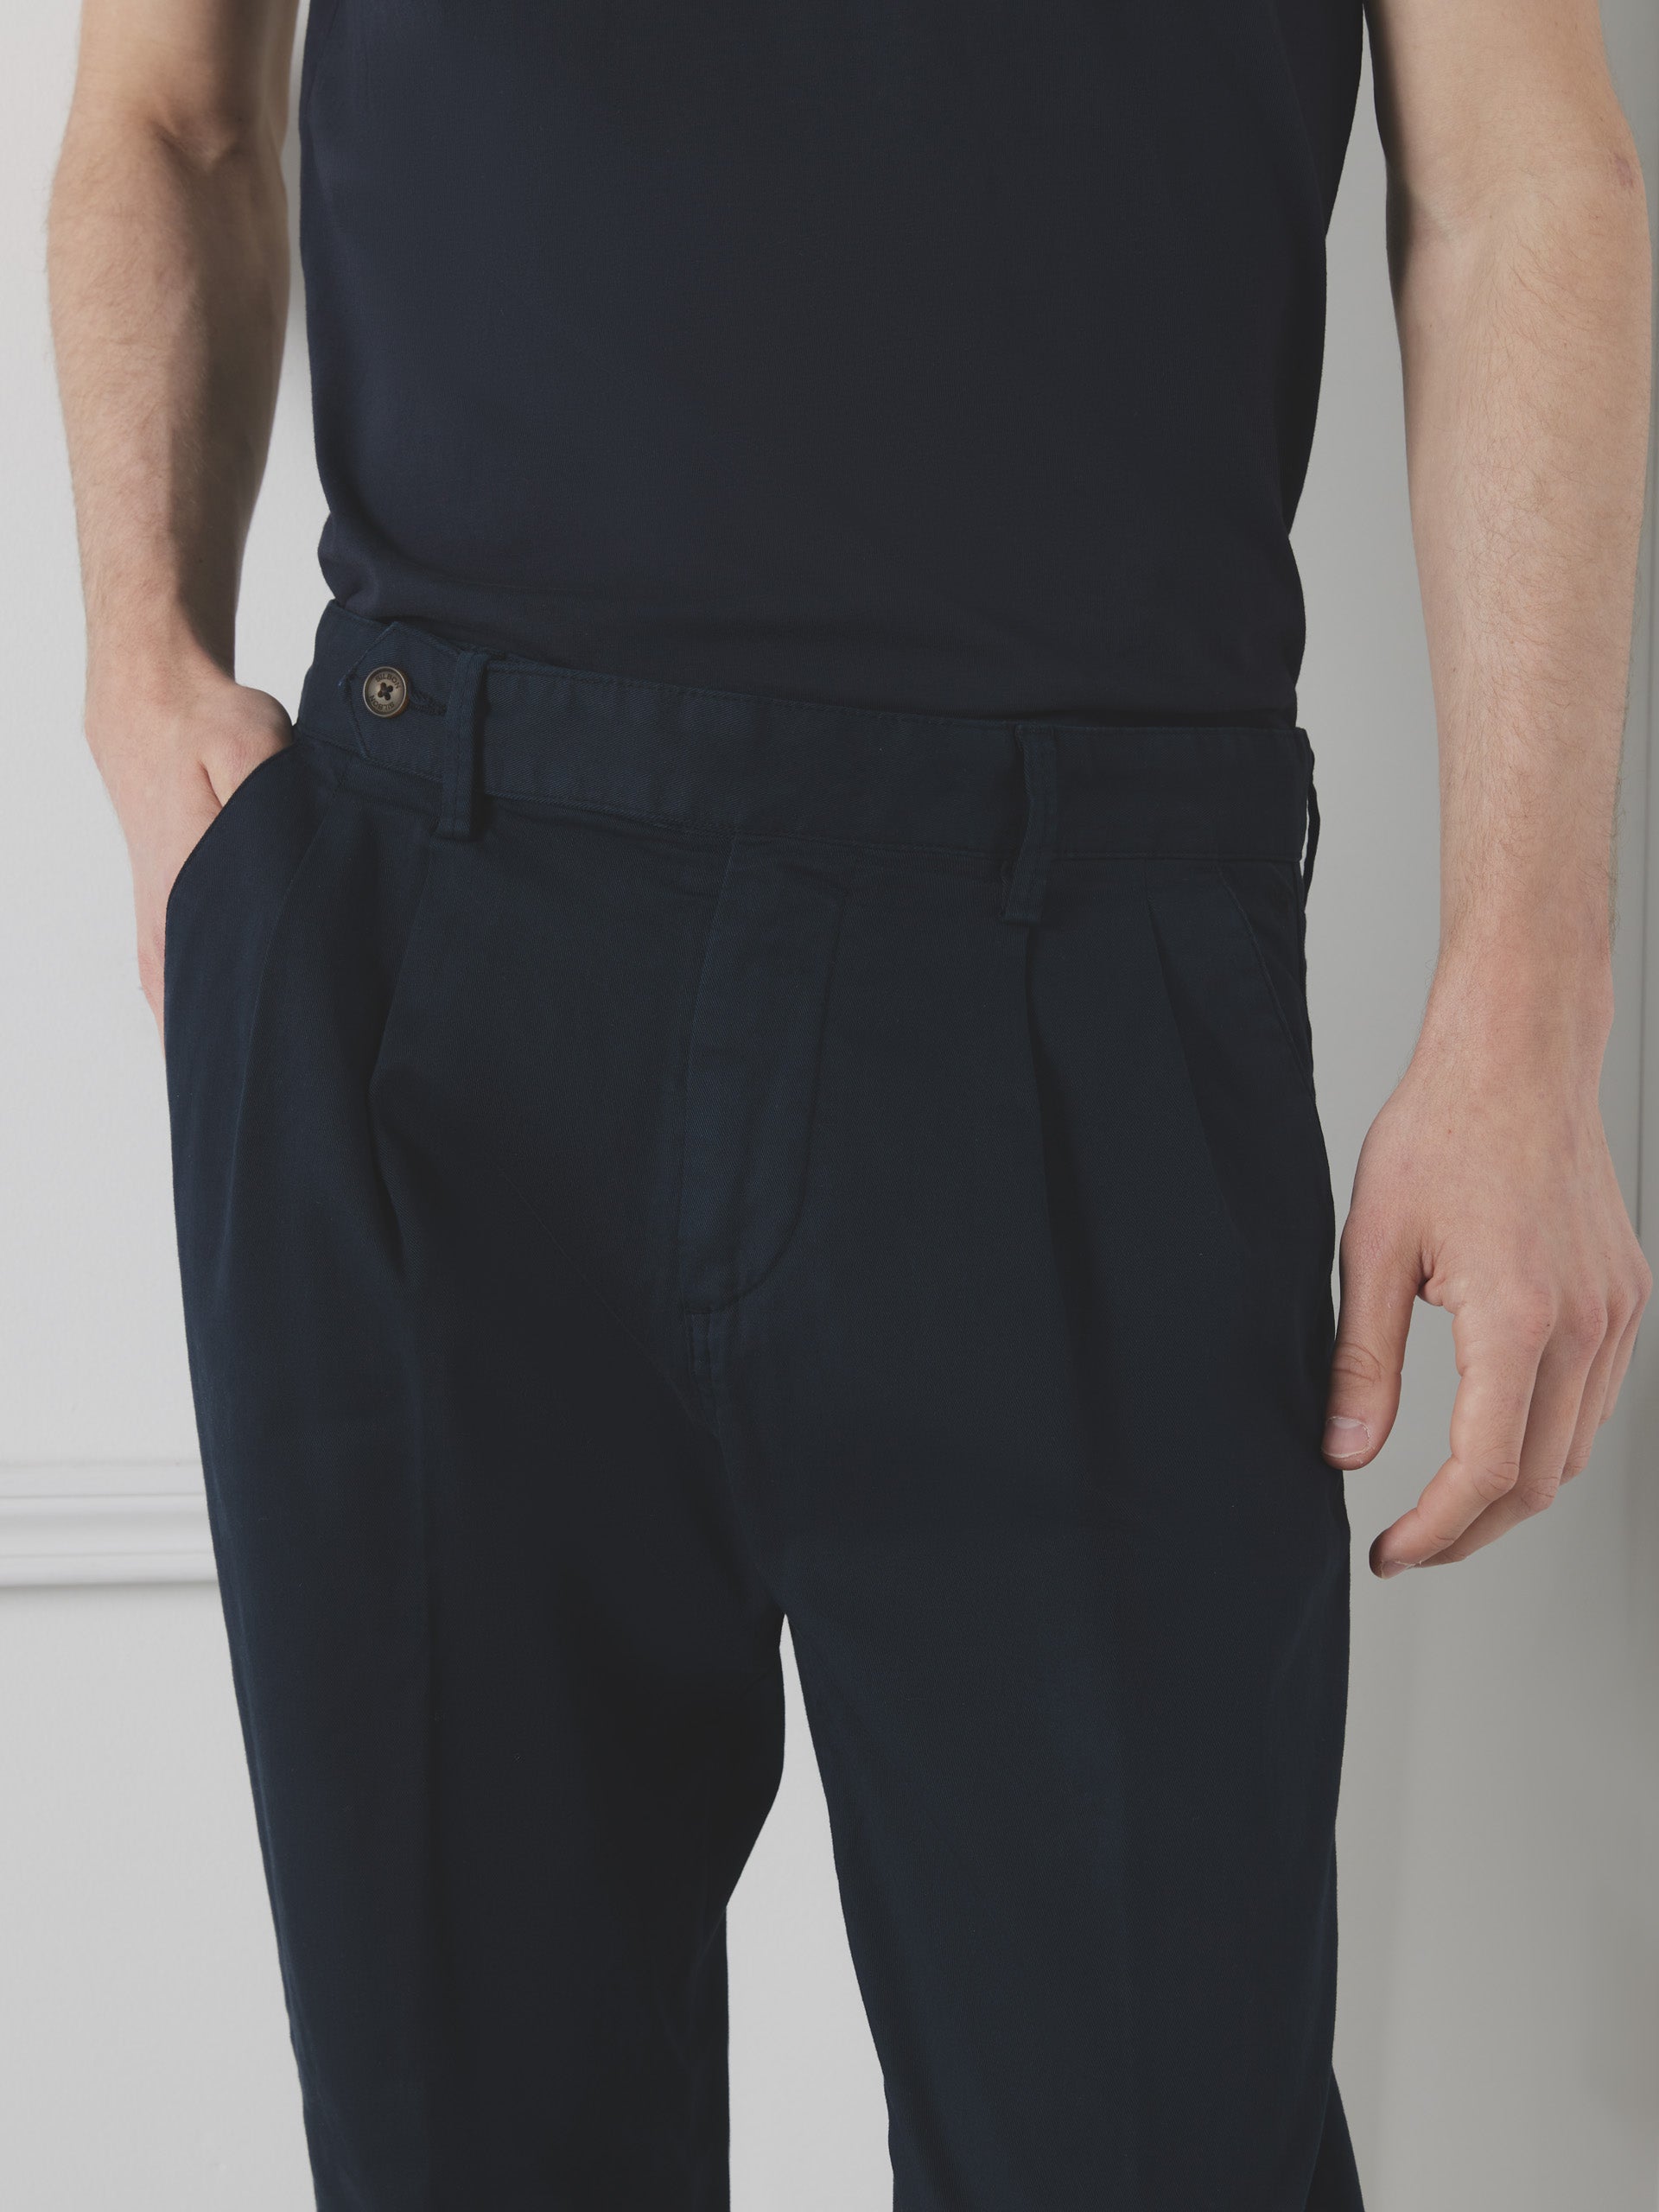 Pantalon doble pinza silbon unique marino